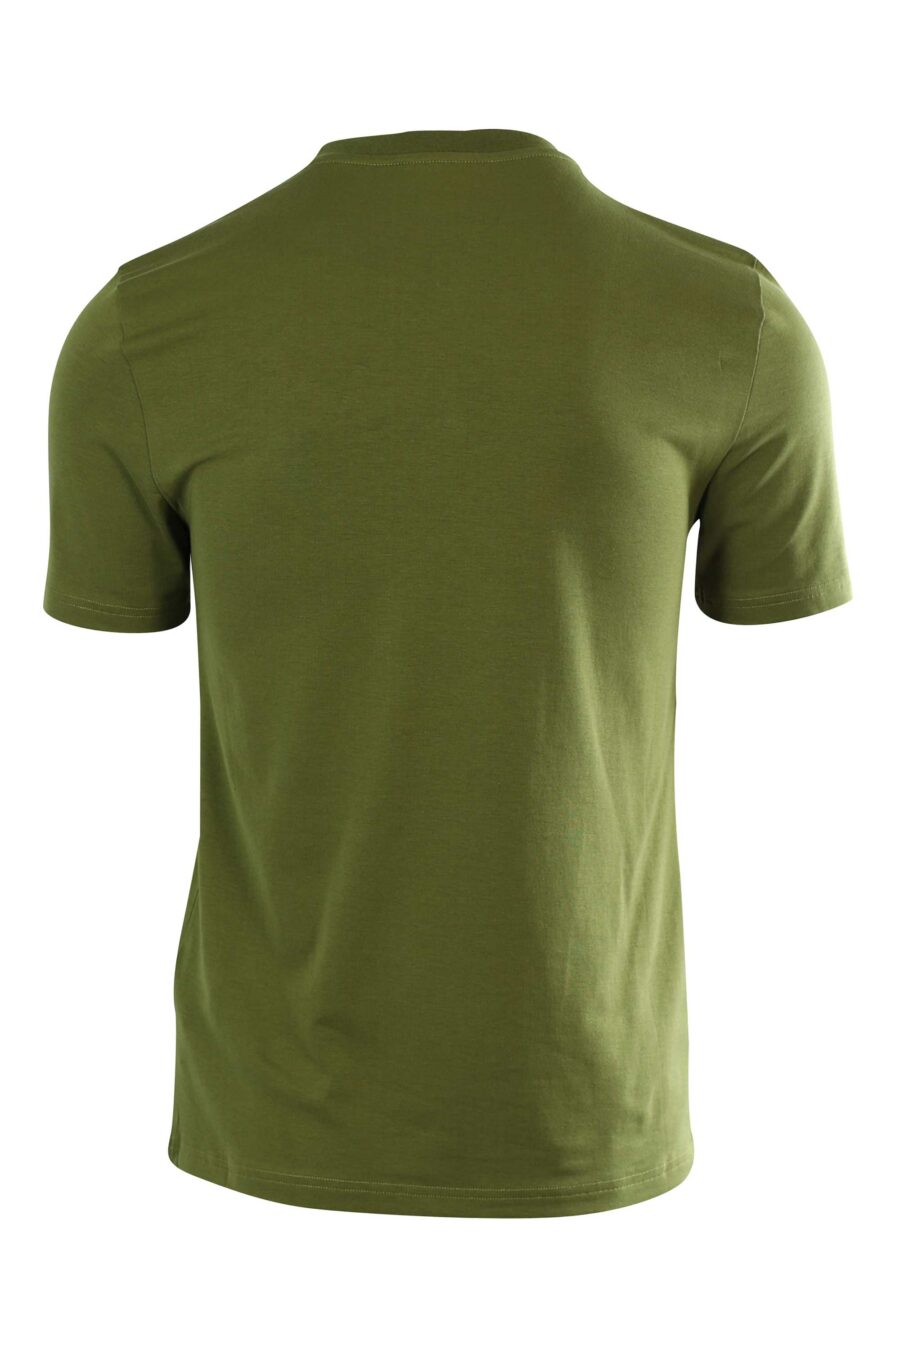 Military green T-shirt with black maxilogue - 889316169805 2